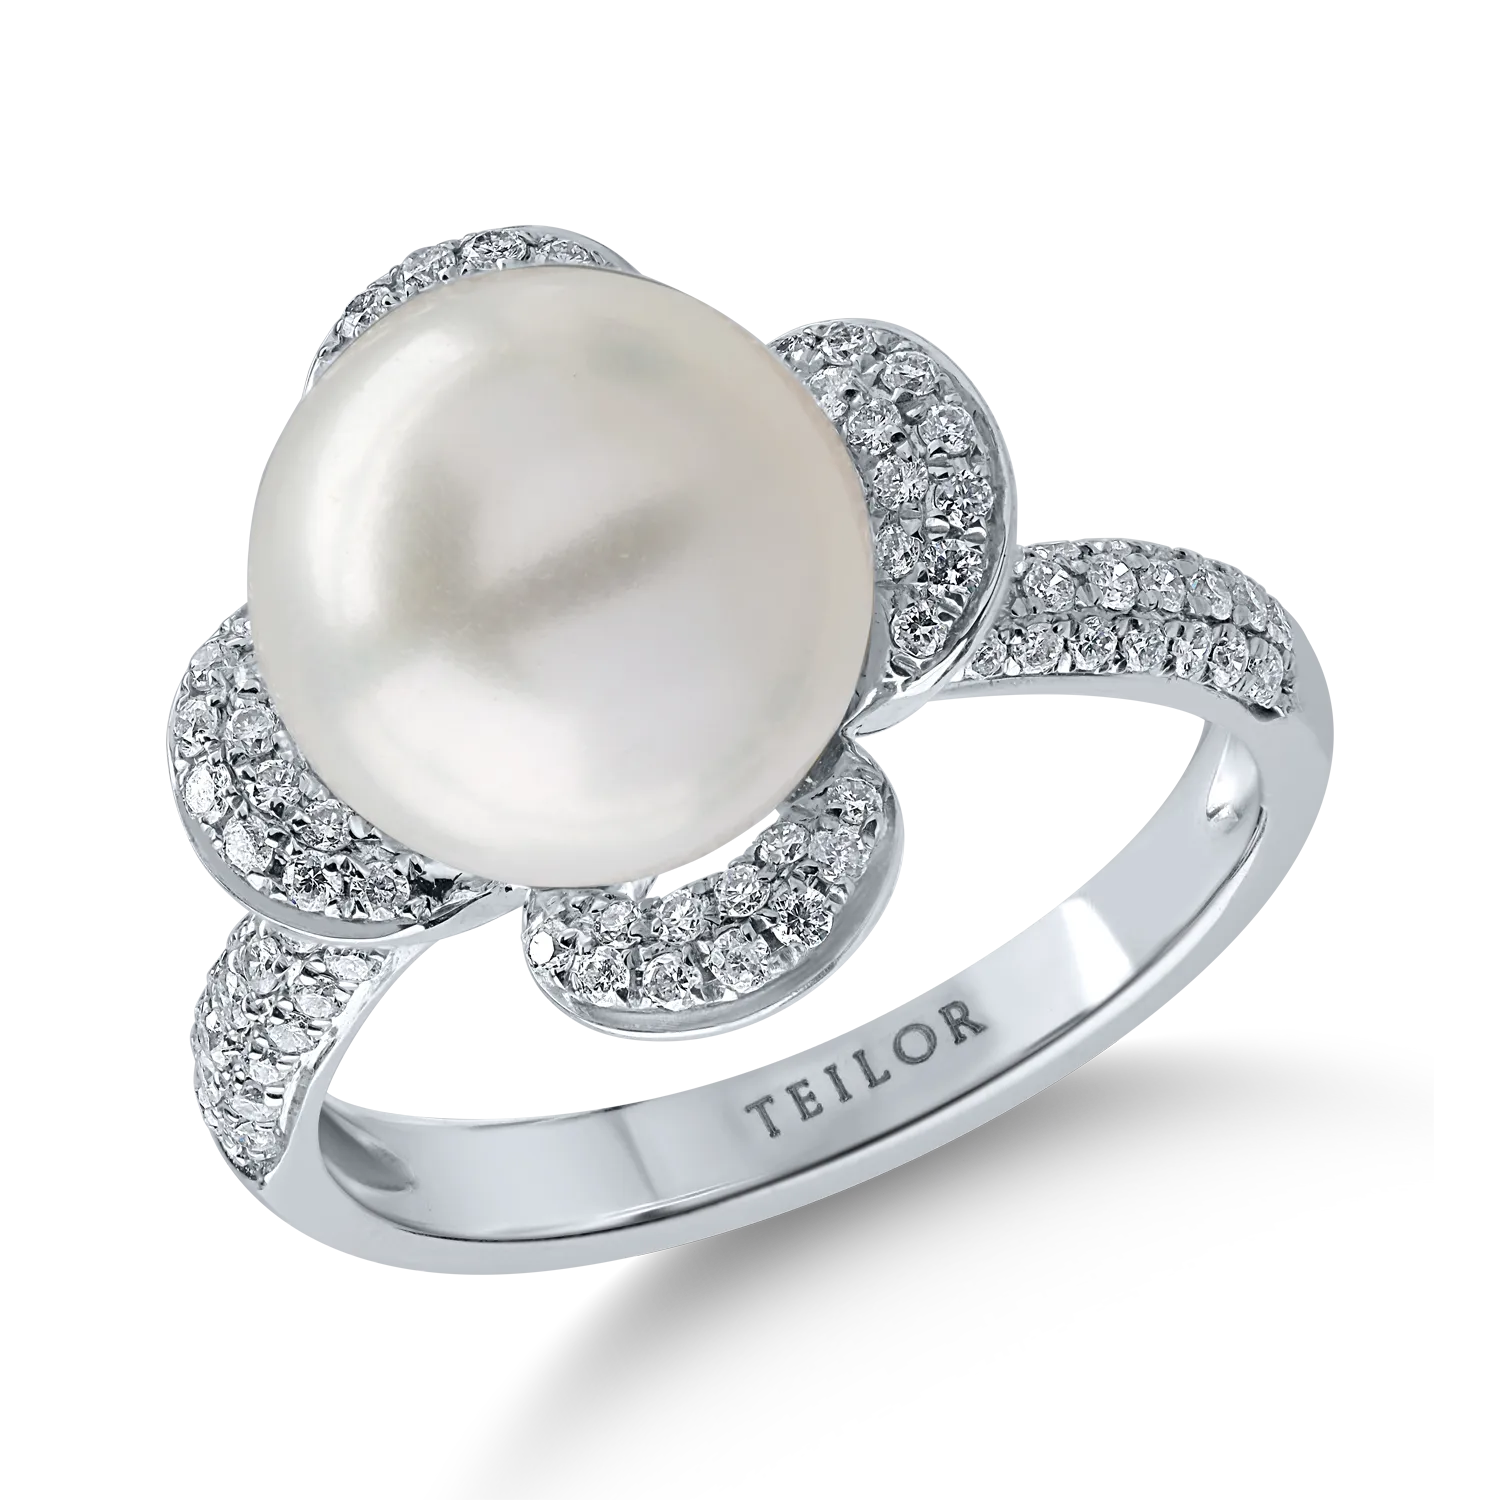 Inel din aur alb cu perla de cultura de 8.5ct si diamante de 0.4ct